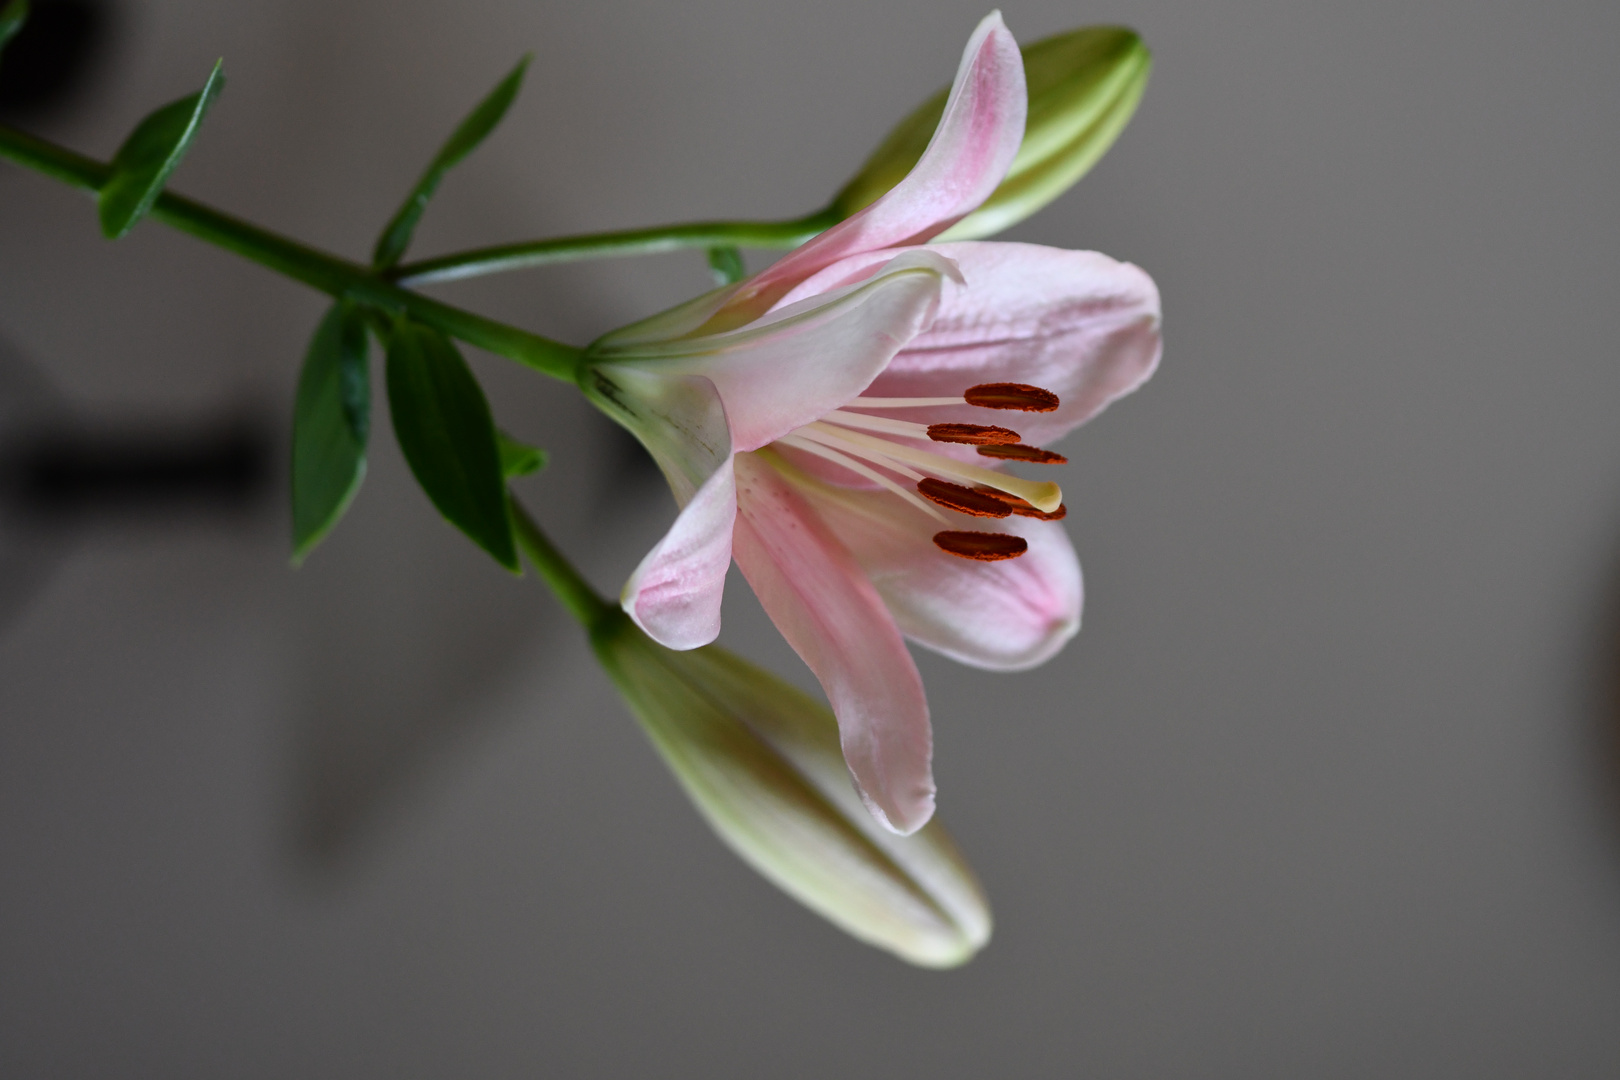 Lilie 1 (Lilium longiflorum x oriental) ‘Pink Heaven’